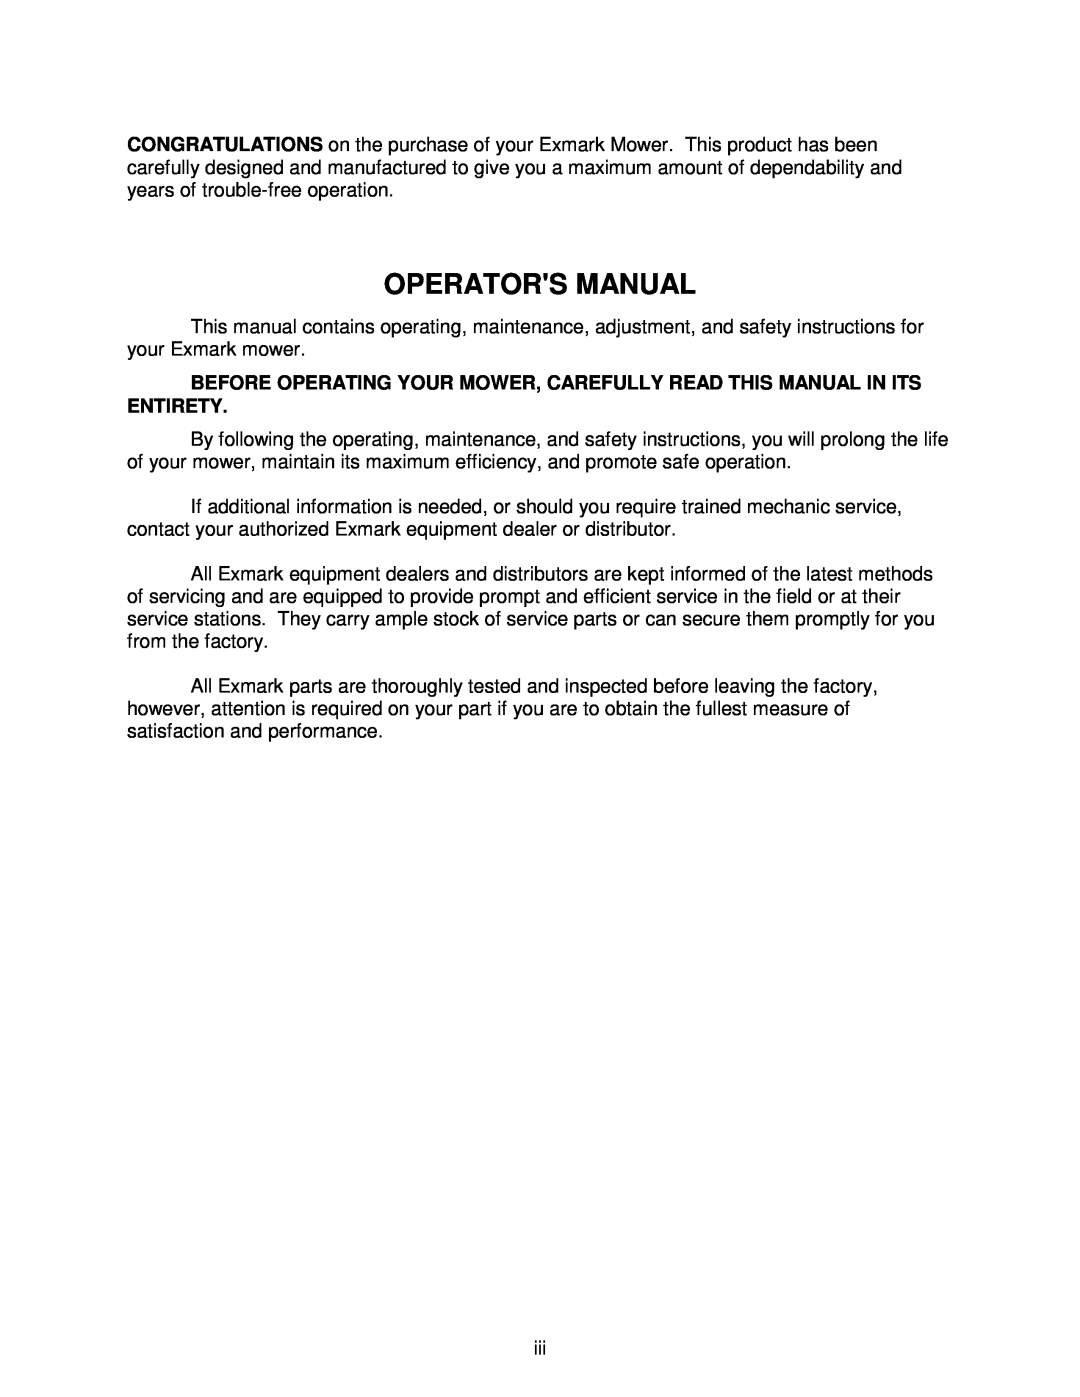 Exmark Lazer Z CT manual Operators Manual 